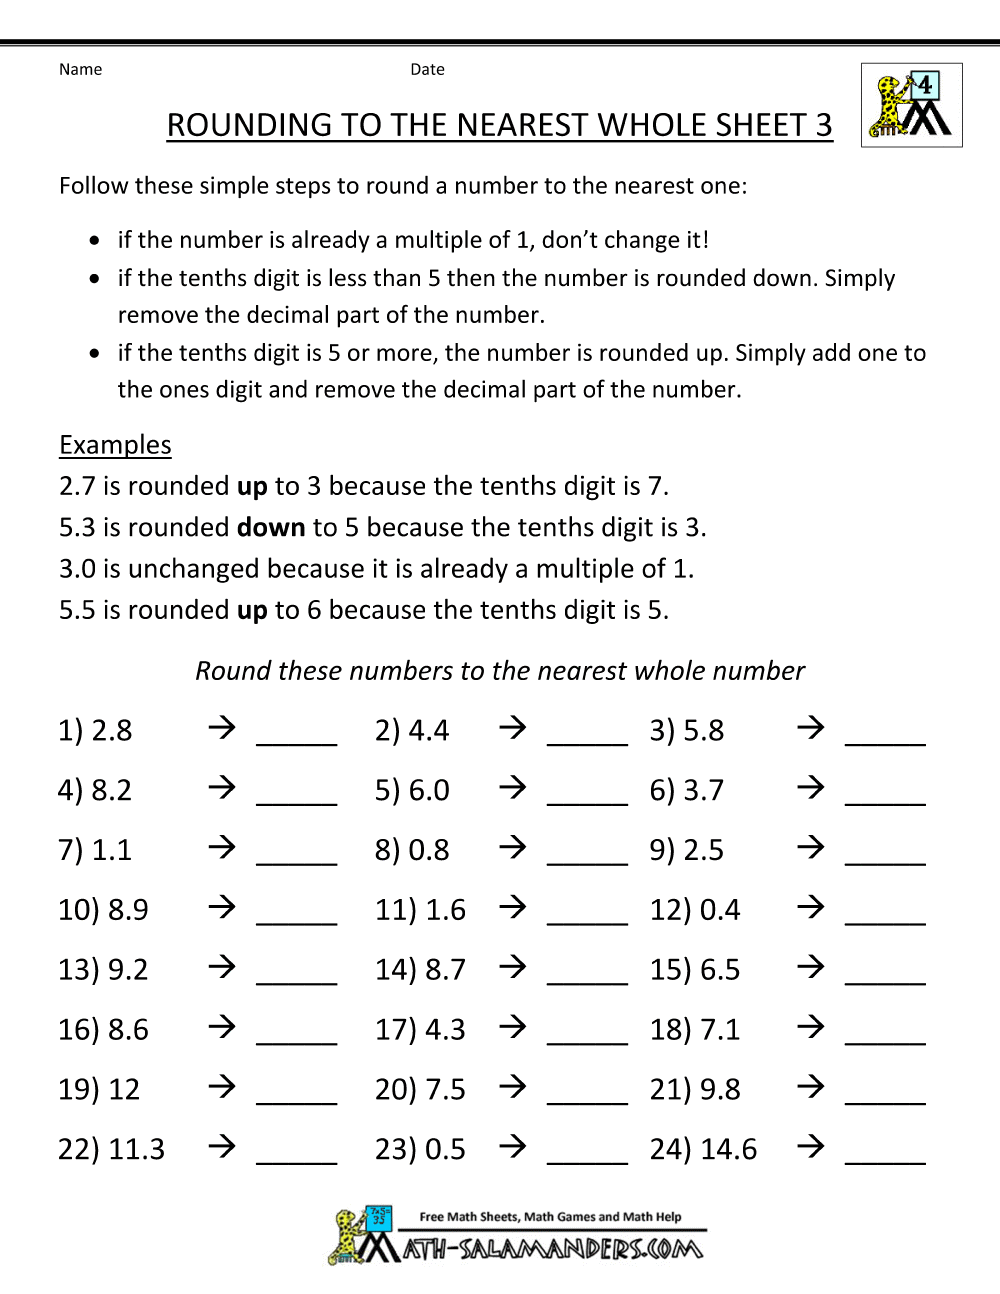 rounding-whole-numbers-worksheet